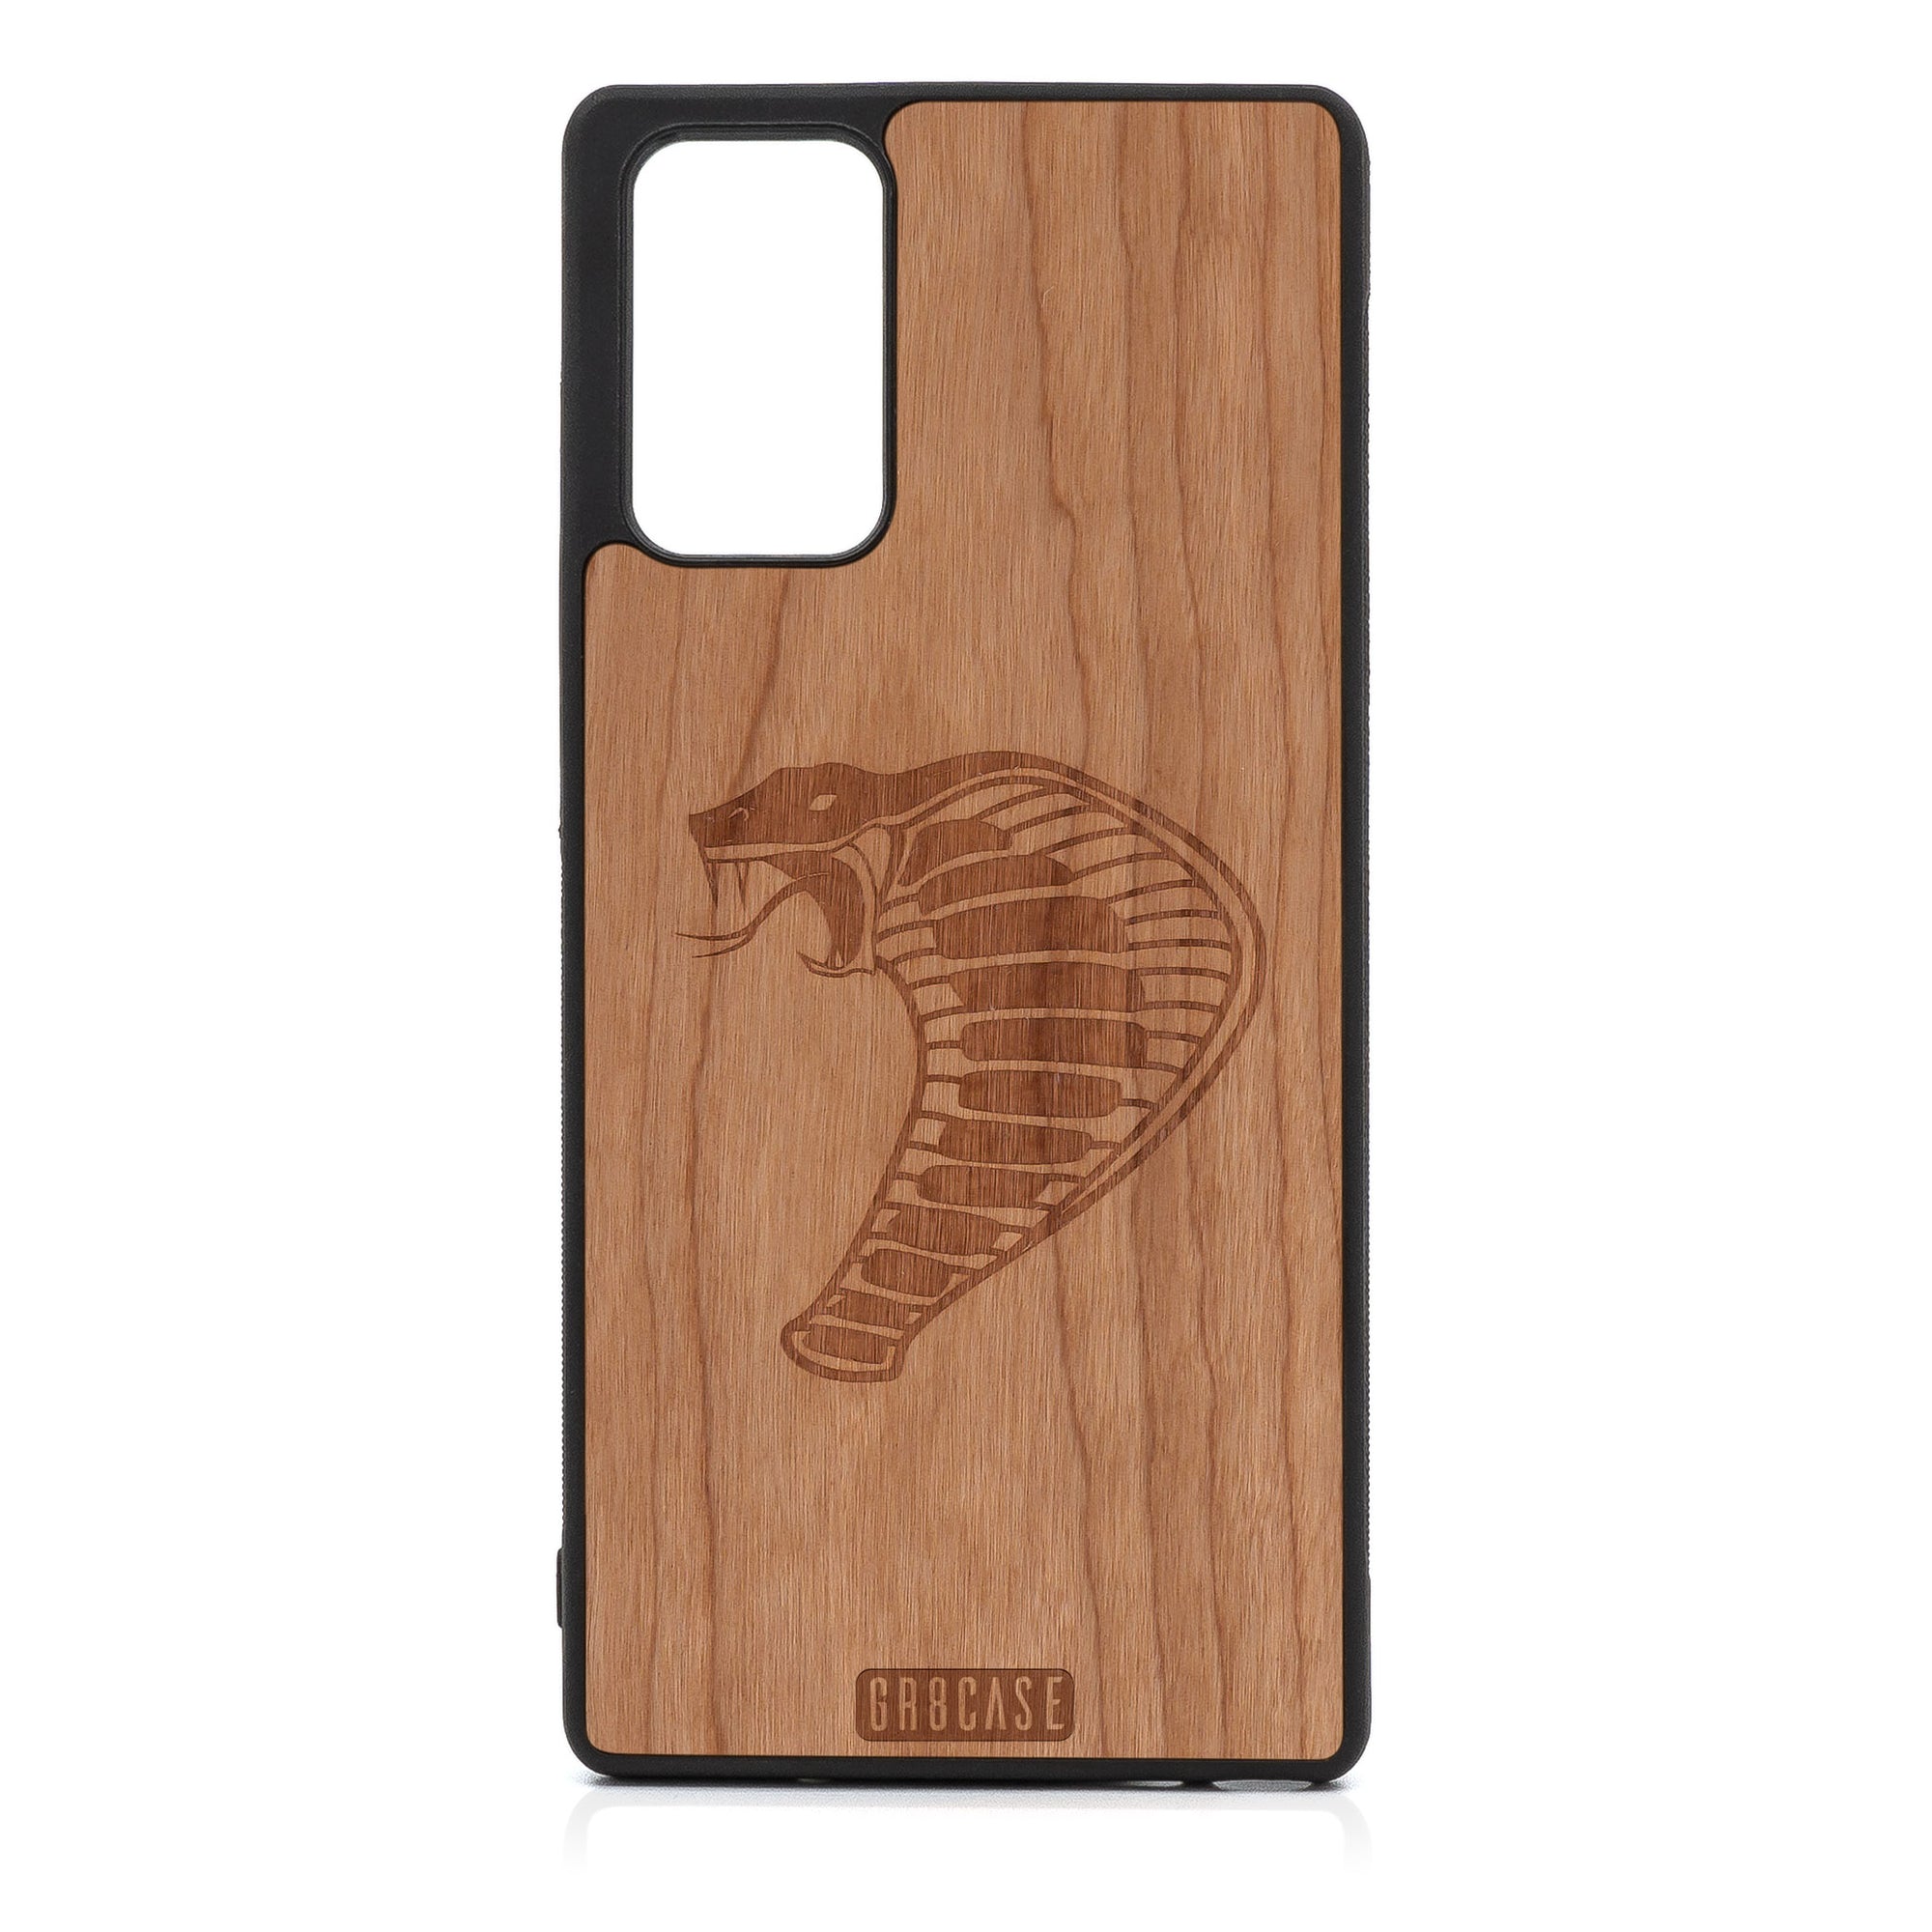 Cobra Design Wood Case For Samsung Galaxy Note 20